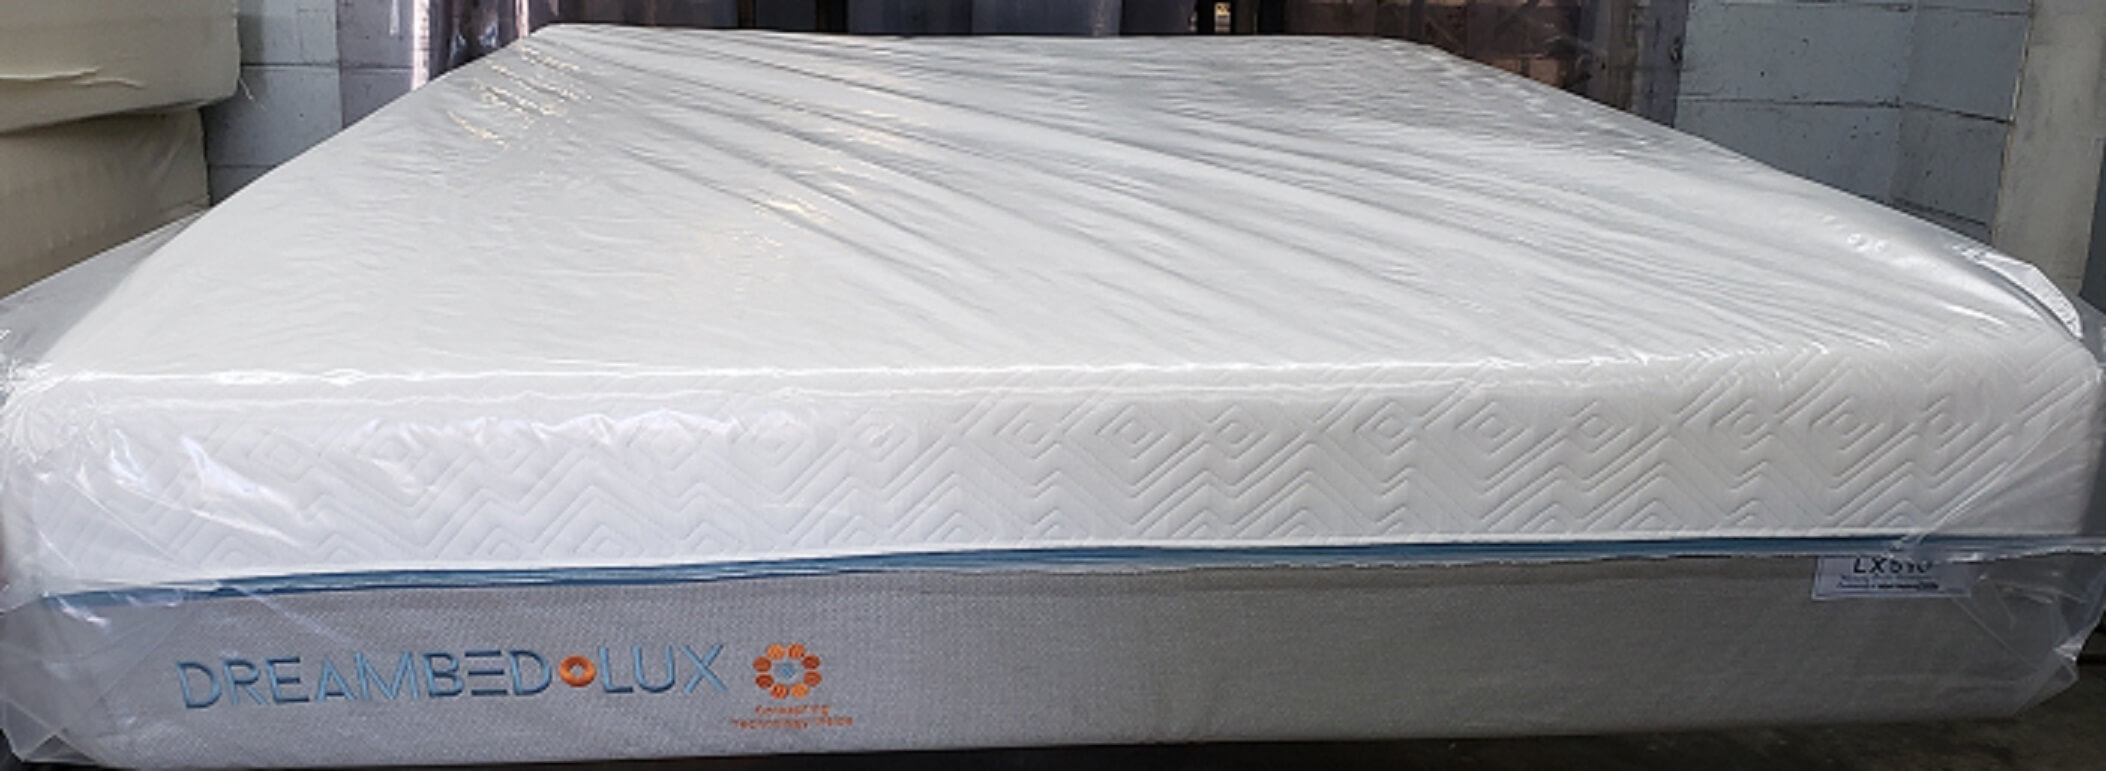 foam by mail lux-r mattress